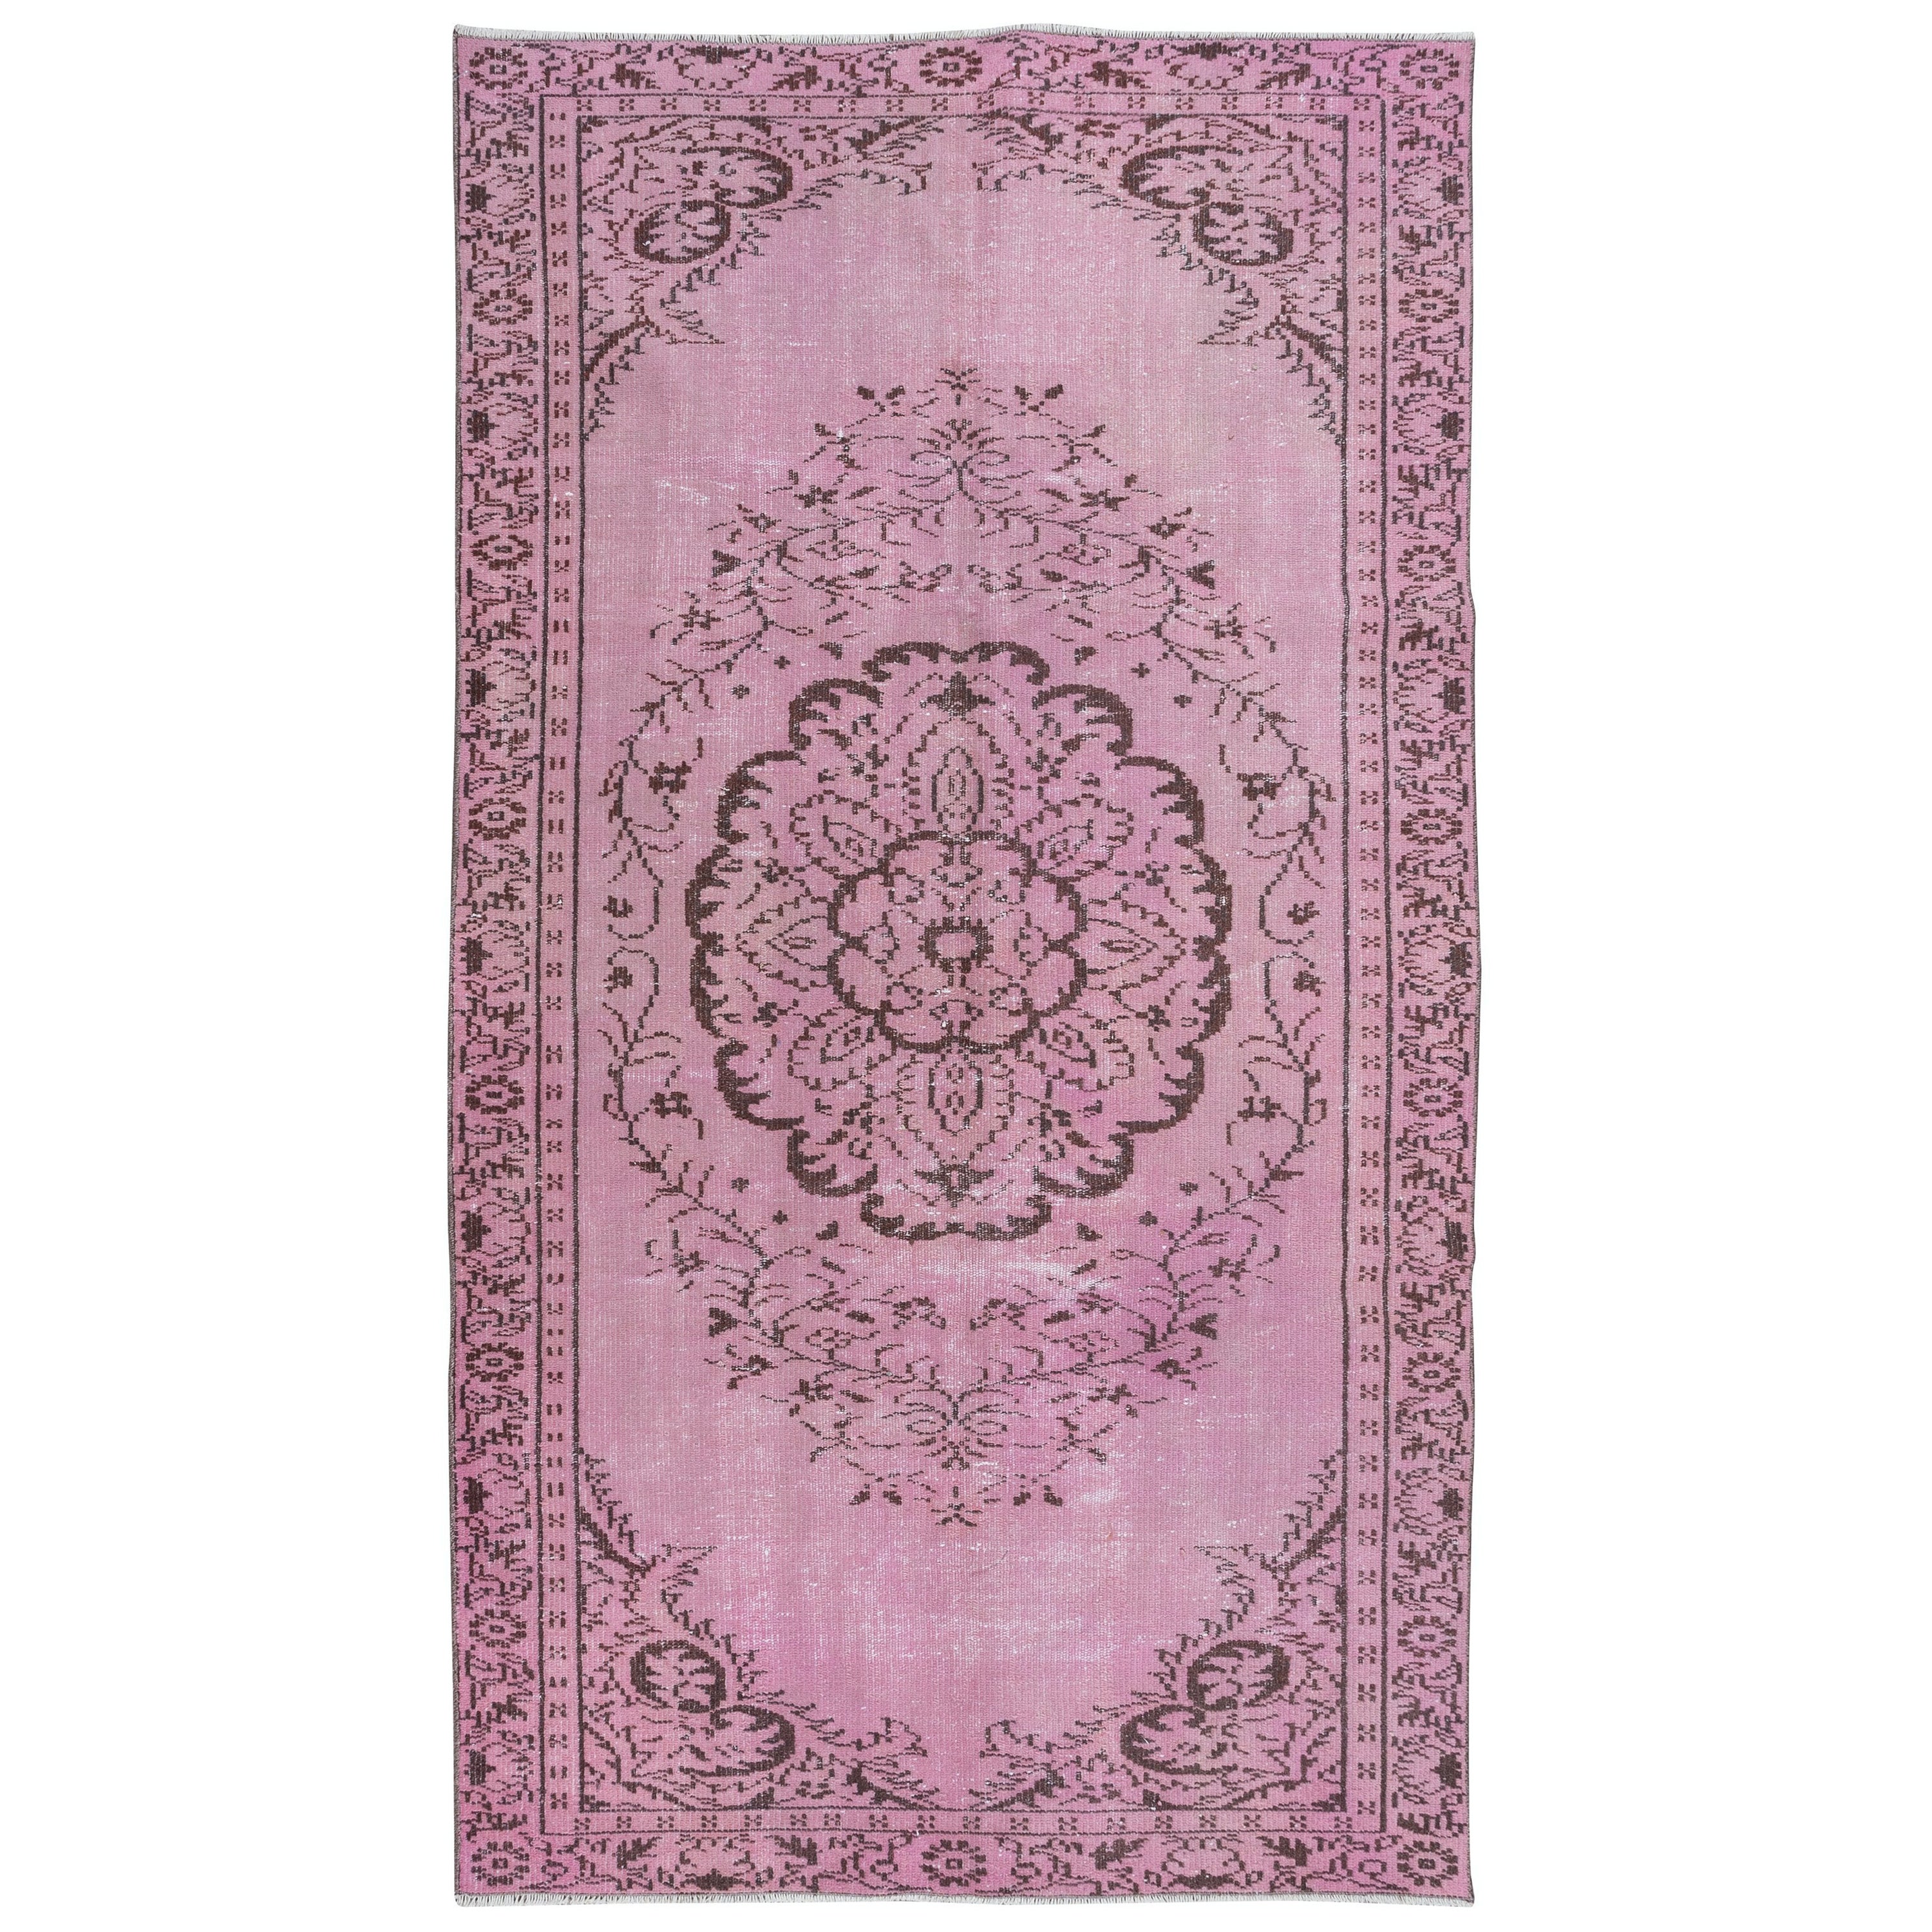 5x8.8 Ft Light Pink Decorative Handmade Turkish Area Rug for Modern Interiors